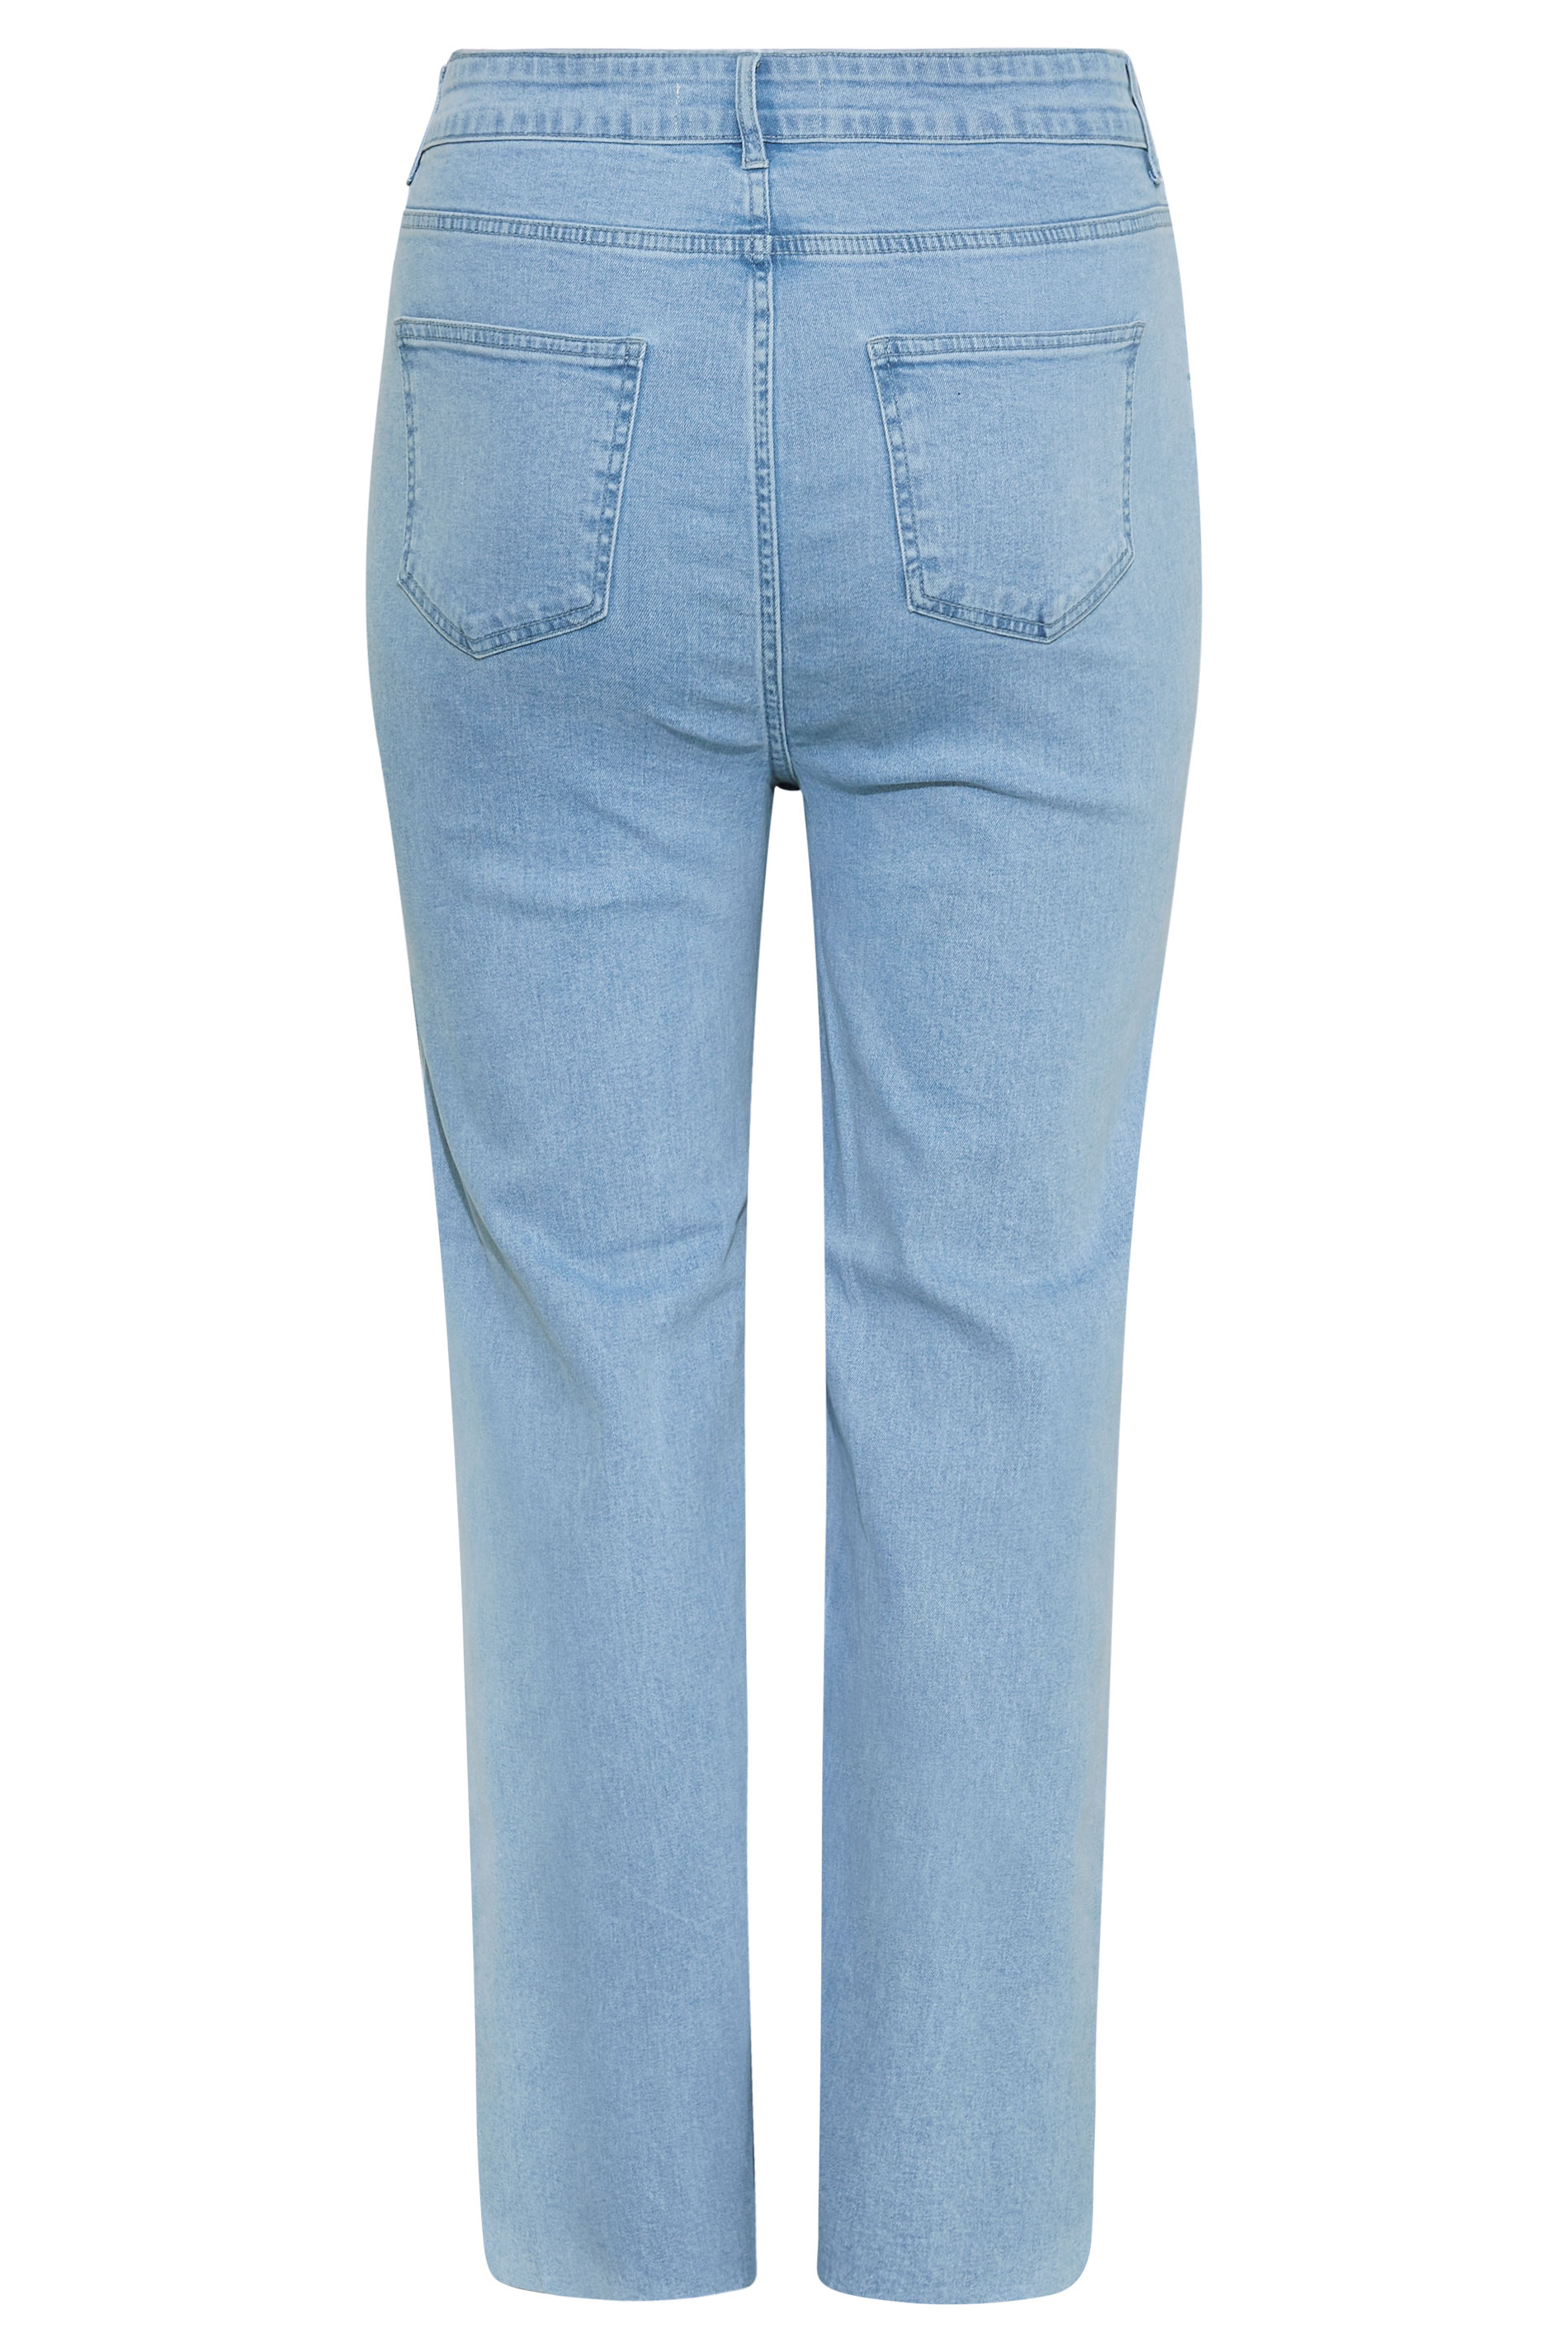 discount 94% Esmara Jeggings & Skinny & Slim WOMEN FASHION Jeans Basic Blue 38                  EU 